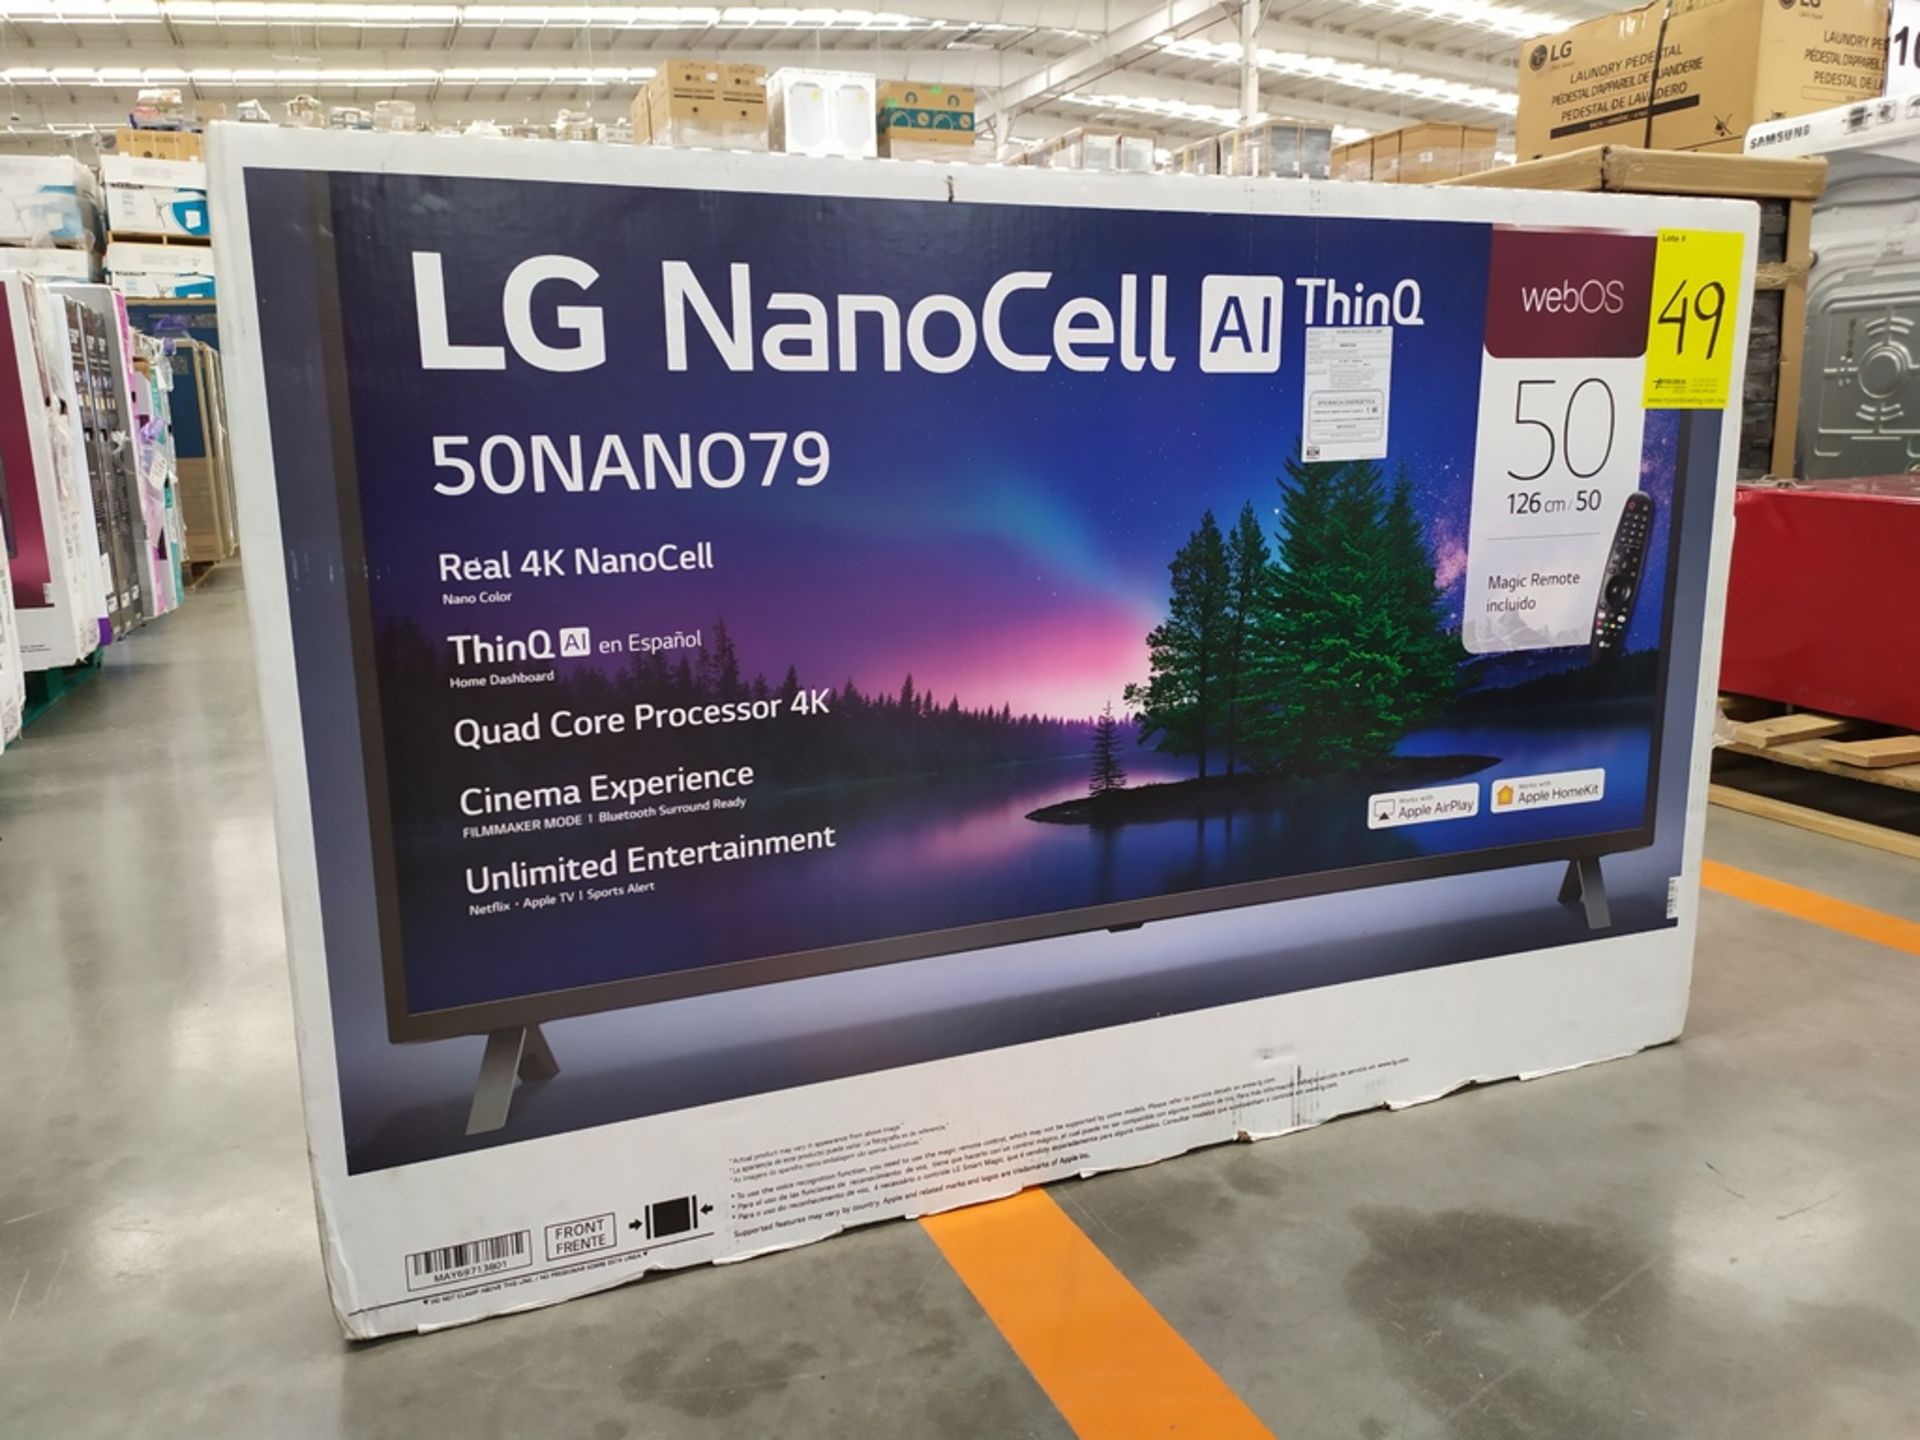 Pantalla Smart TV Marca LG De 50" Nanocell Modelo 50NAN079 No De Serie 104MXLS40960 - Image 5 of 9